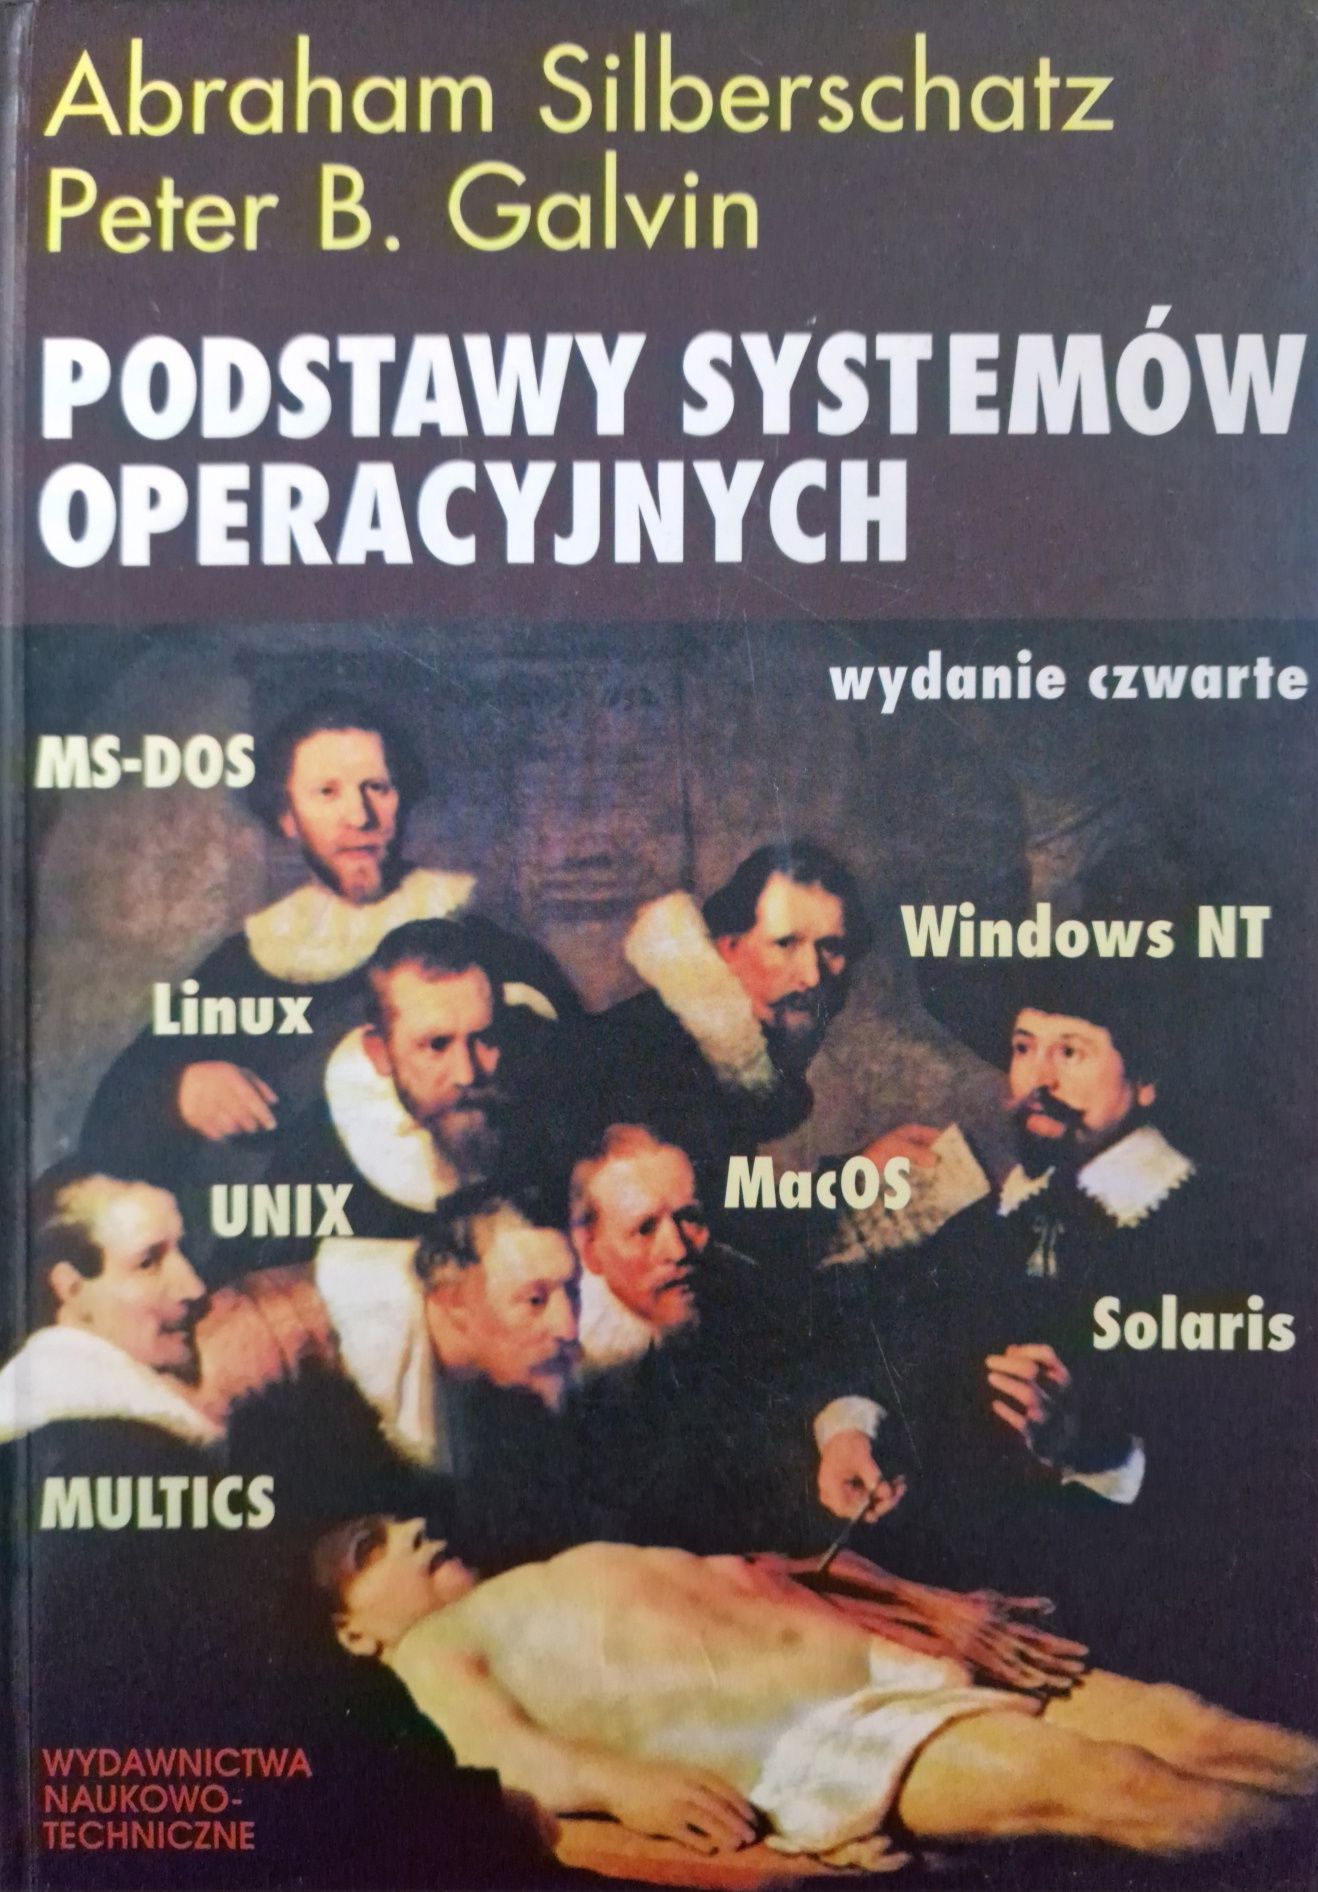 Podstawy systemów operacyjnych Silberschatz A. Galvin P.B.